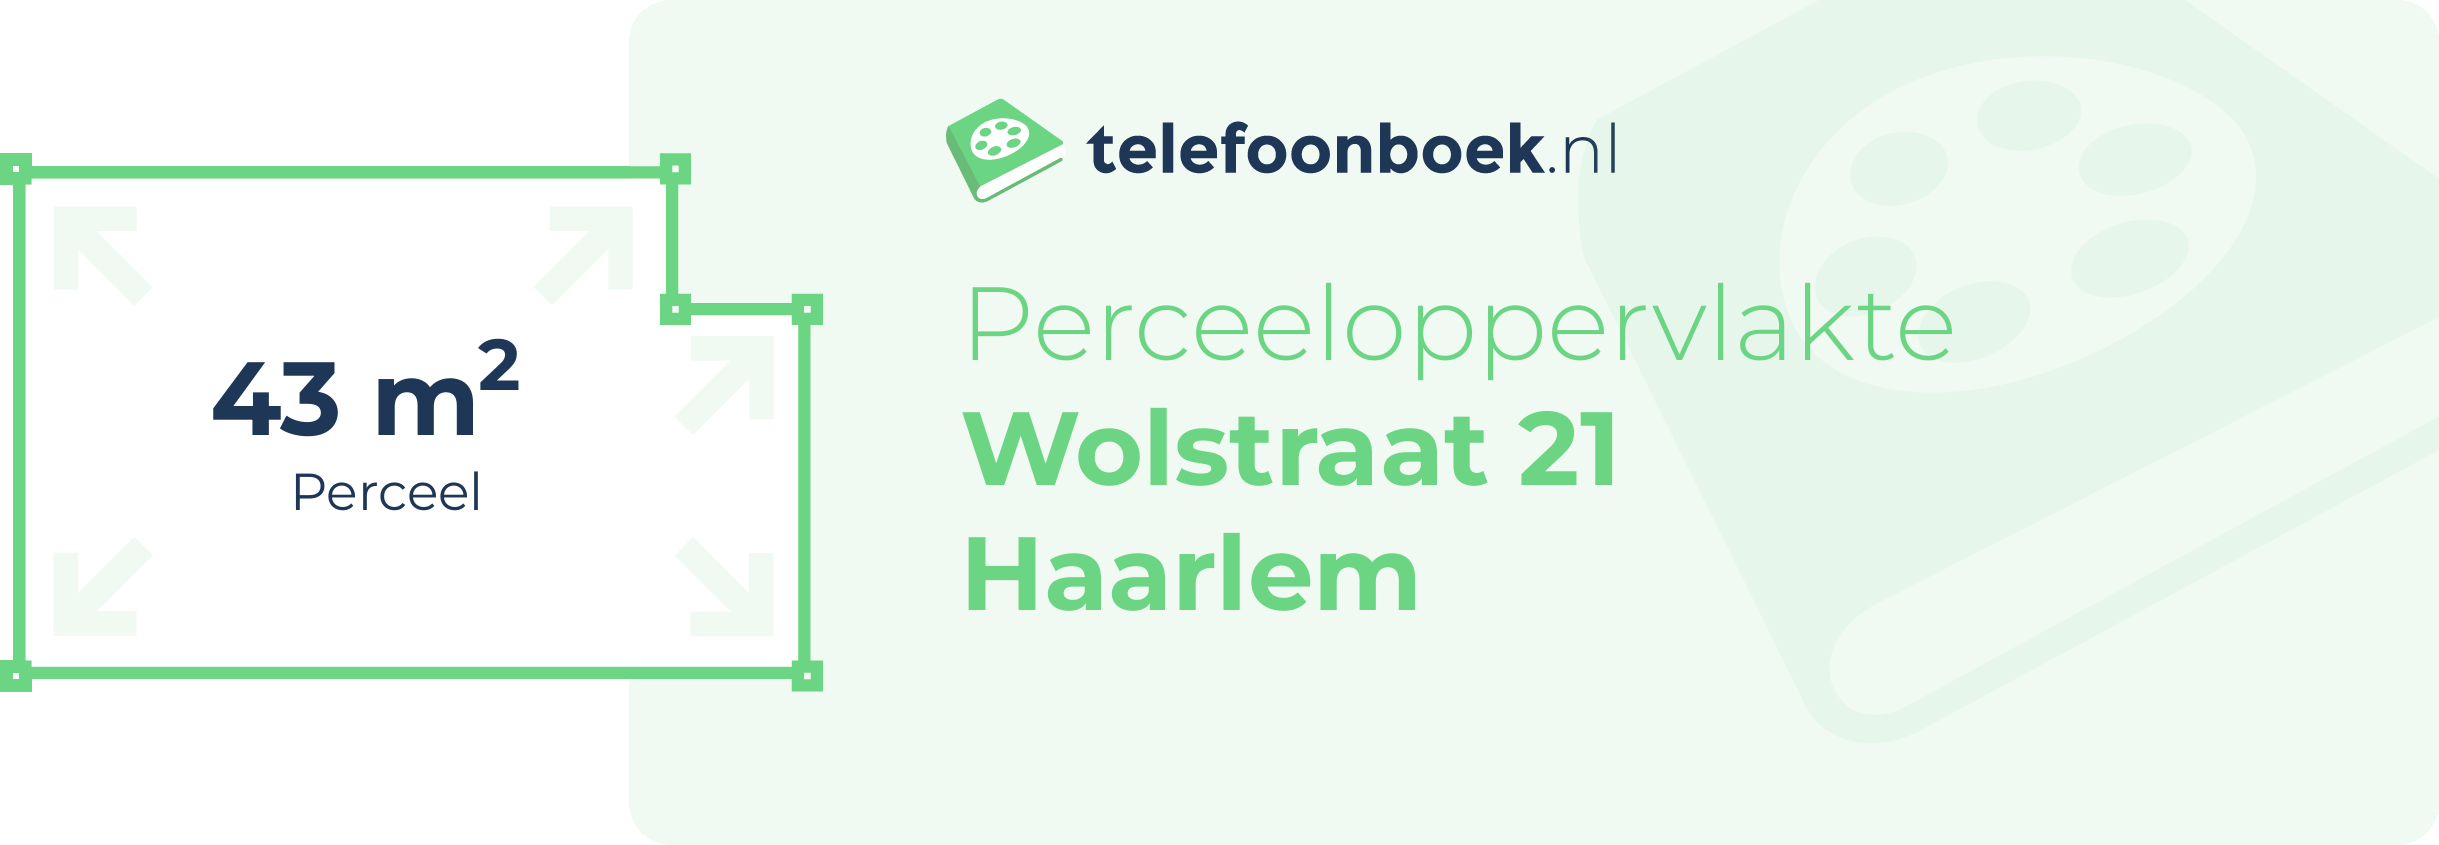 Perceeloppervlakte Wolstraat 21 Haarlem